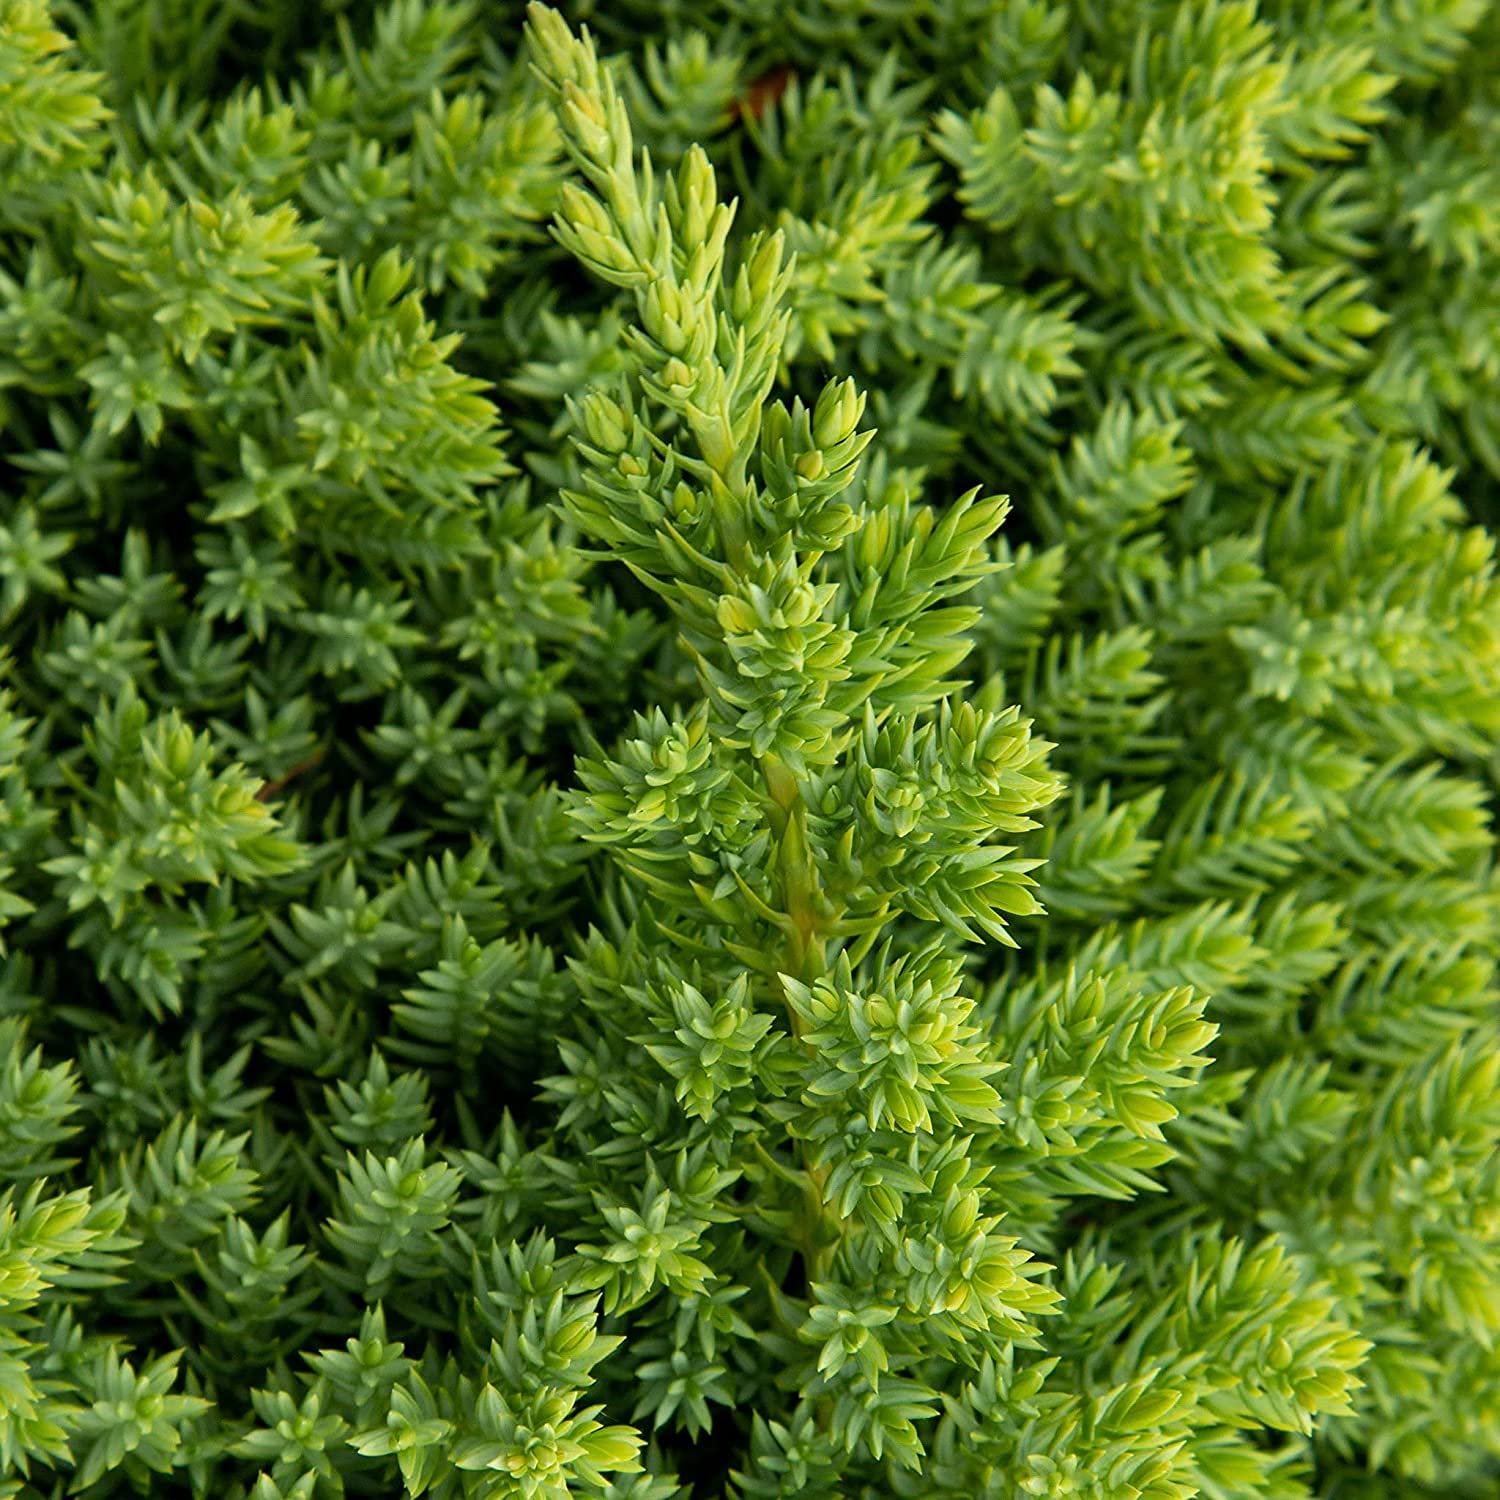 Dwarf Japanese Garden Juniper | 1 Live 4 Inch Pot | Juniperus Procumbens Nana | Drought Tolerant Evergreen Groundcover | Great Plants for Bonsai